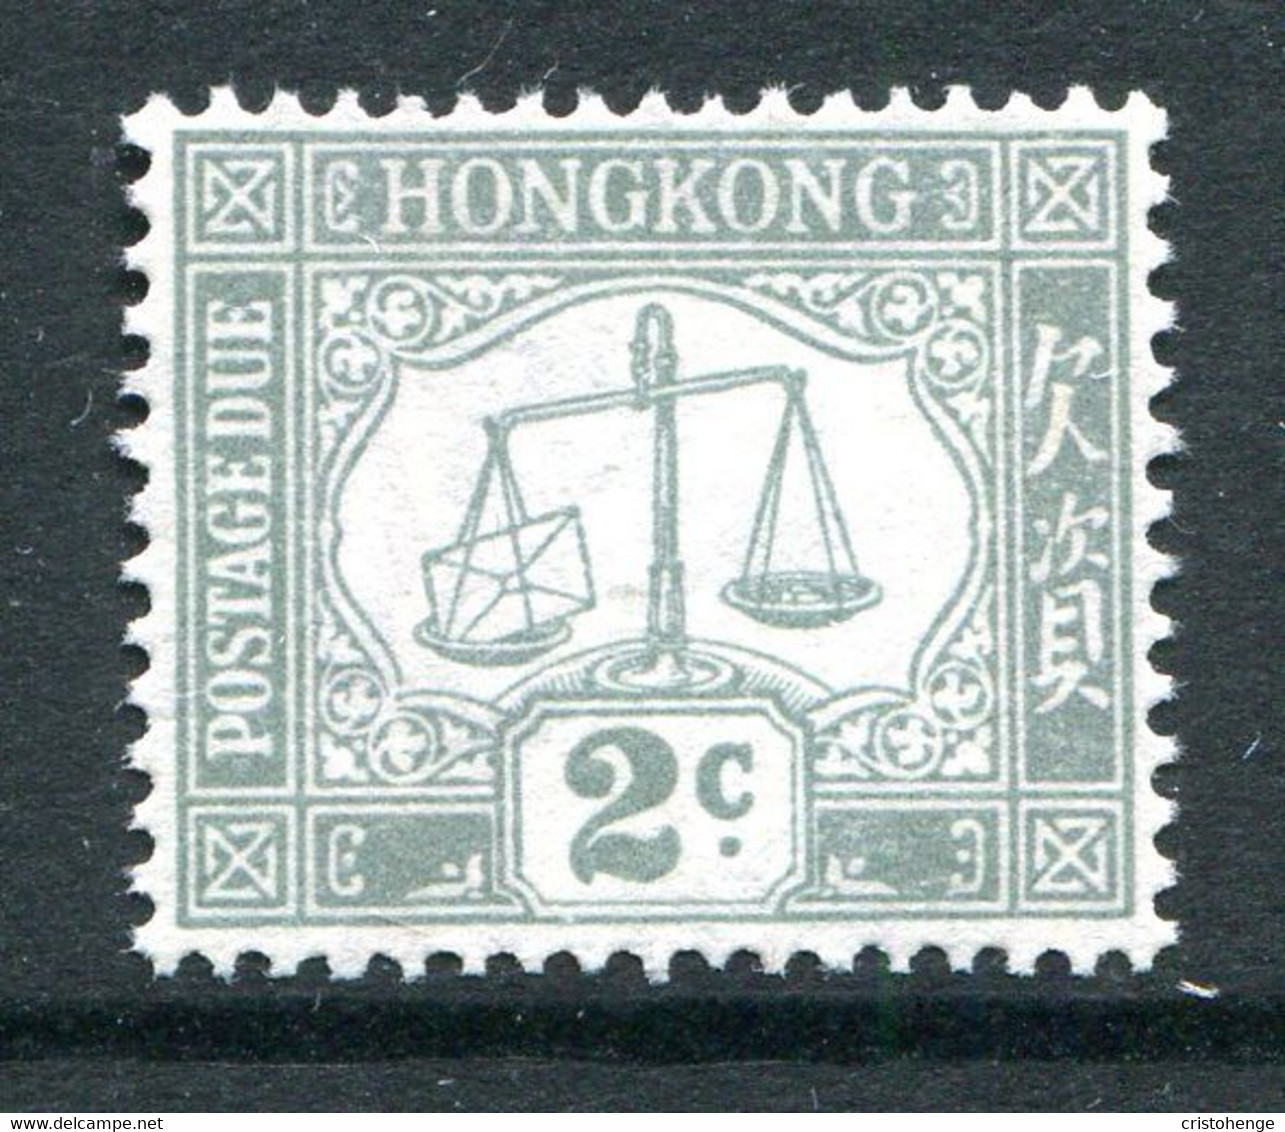 Hong Kong 1938-63 Postage Dues - 2c Grey - Ordinary Paper - MNH (SG D6) - Portomarken